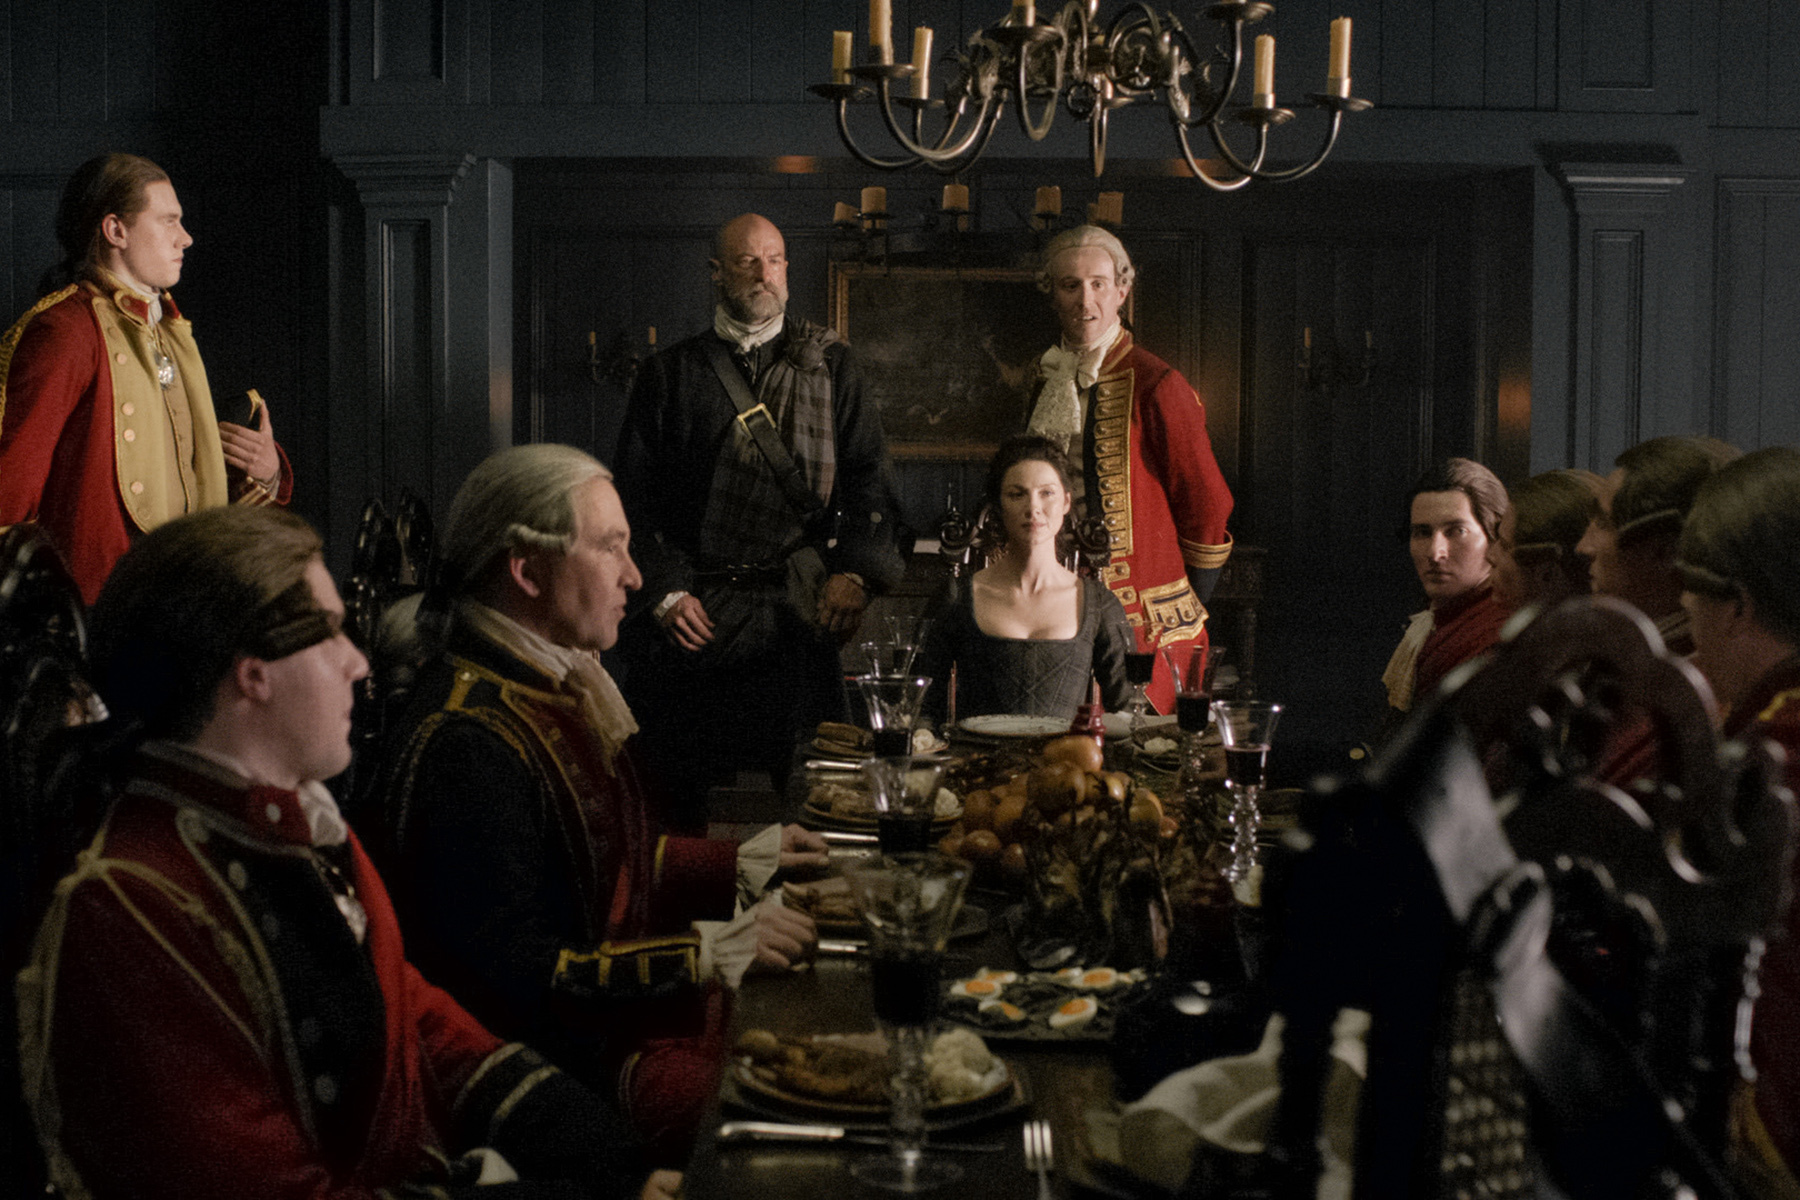 Still of Graham McTavish and Caitriona Balfe in Outlander (2014)